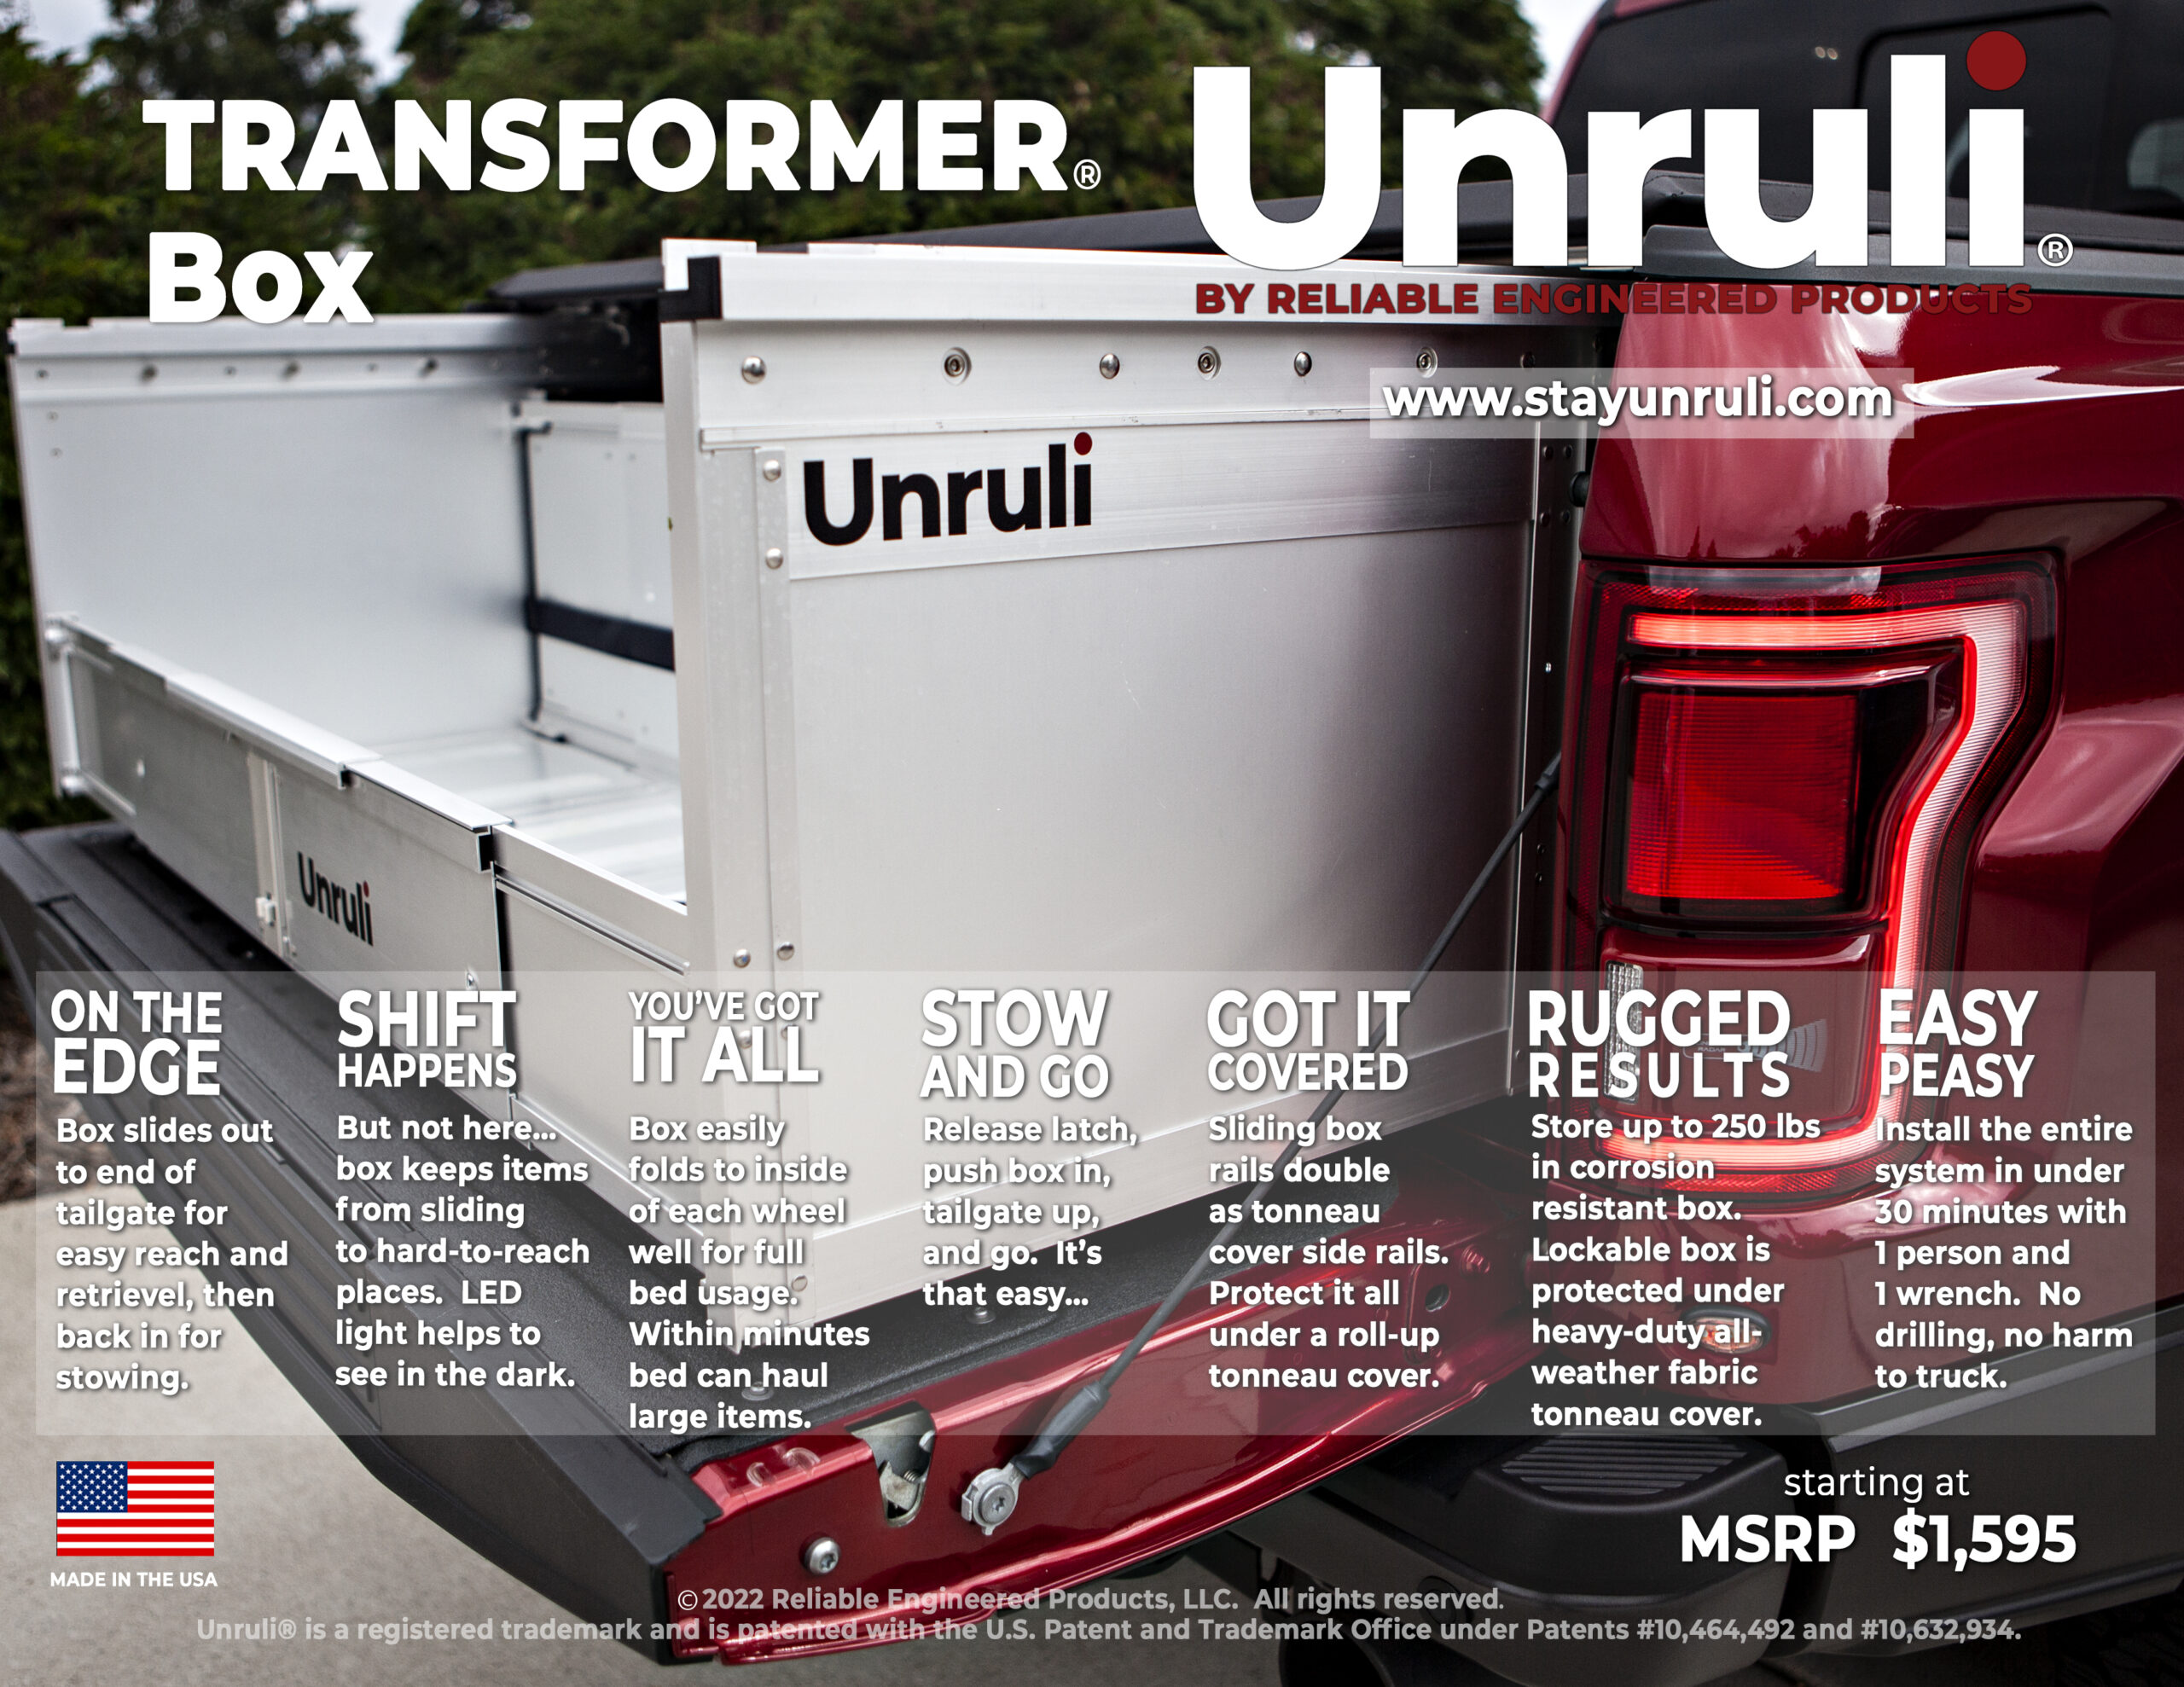 Unruli Foldable Box features